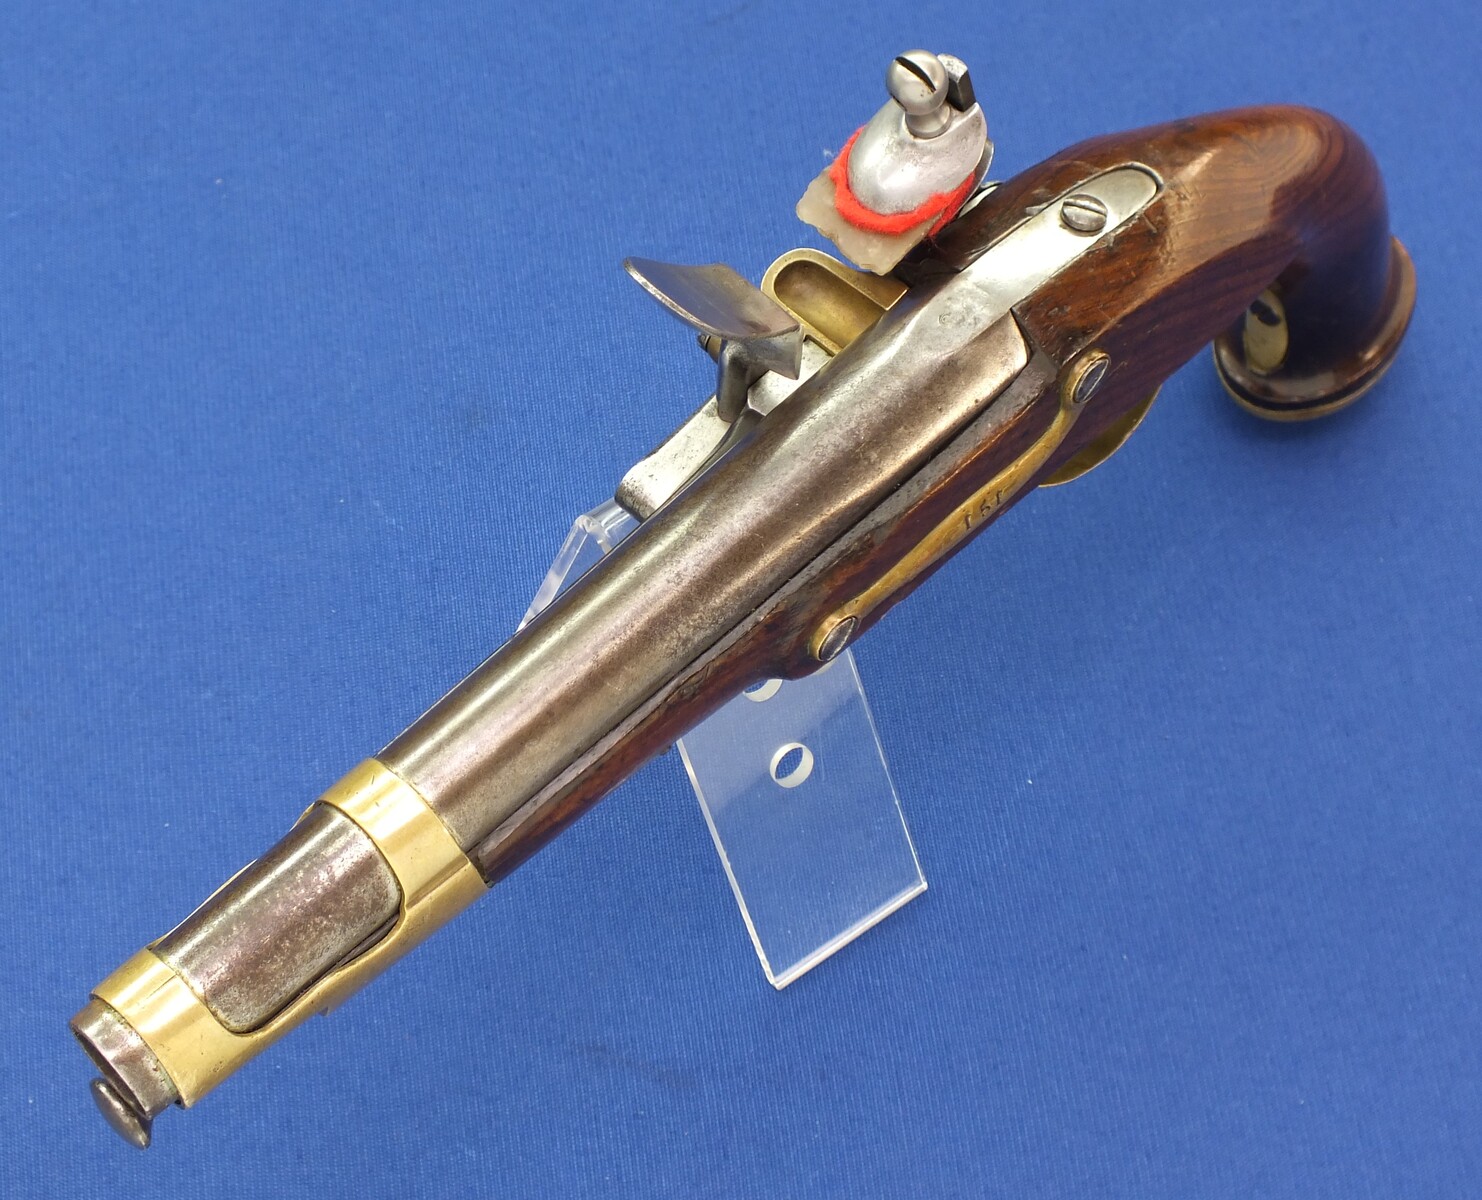 An antique French Military Flintlock Pistol Model 1816 Gardes du Corps de Roi, Second Model, signed Manf. Royal de Maubeuge, caliber 17 mm, length 37 cm, in very good condition. Price 3.500 euro